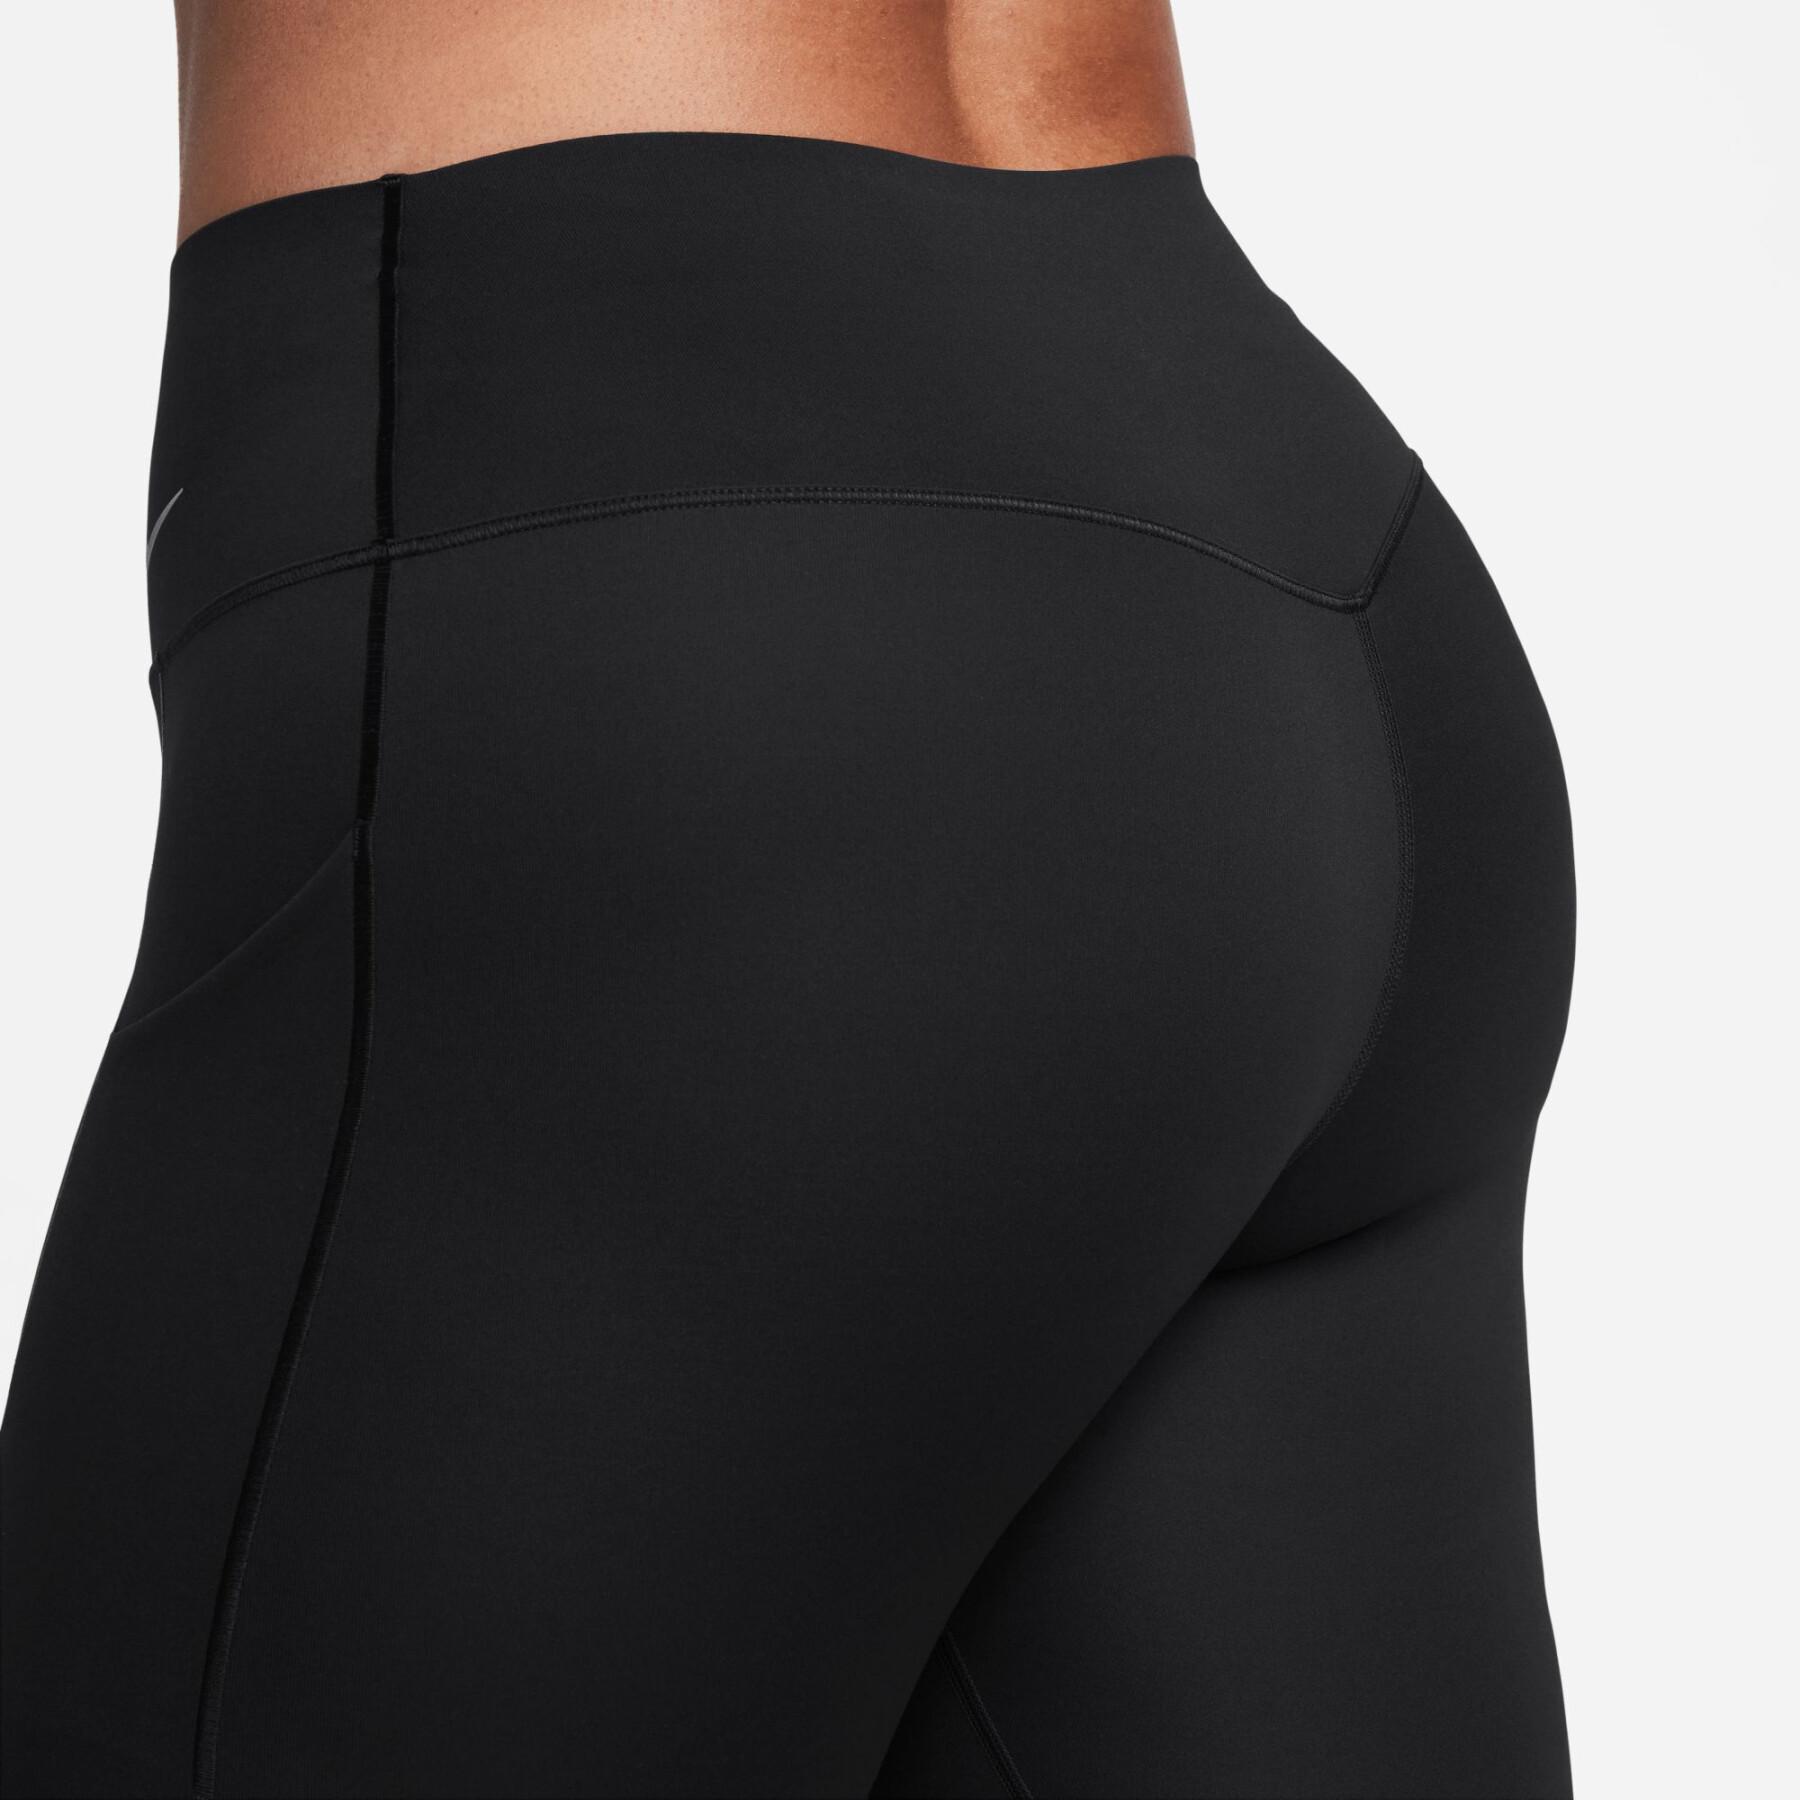 Halfhoge legging voor dames Nike Dri-FIT Universa